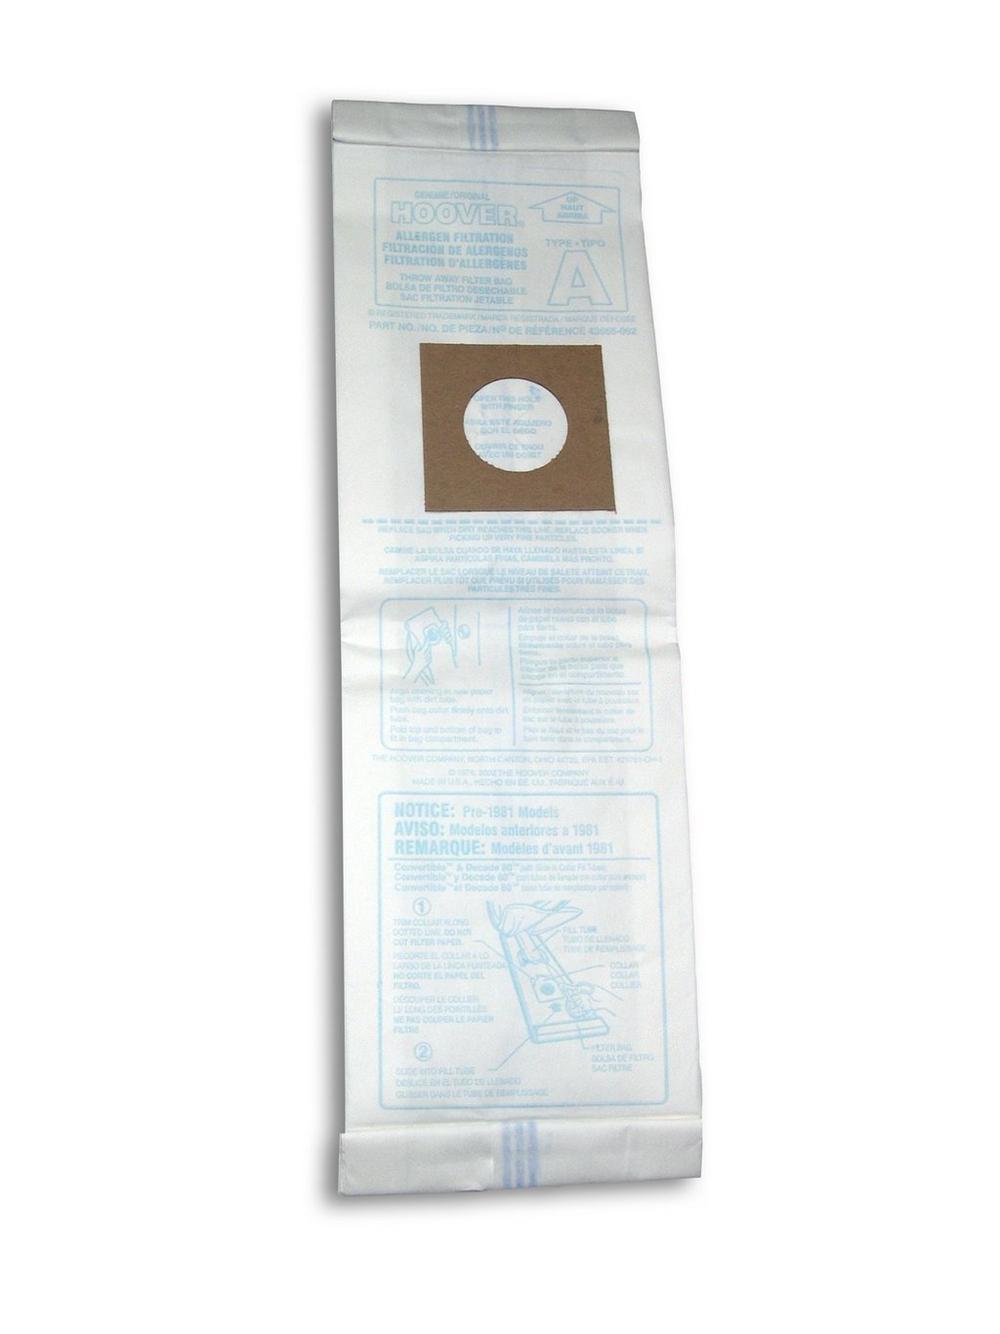 Hoover Disposable Vacuum Bags, Allergen C1, 10/Pack